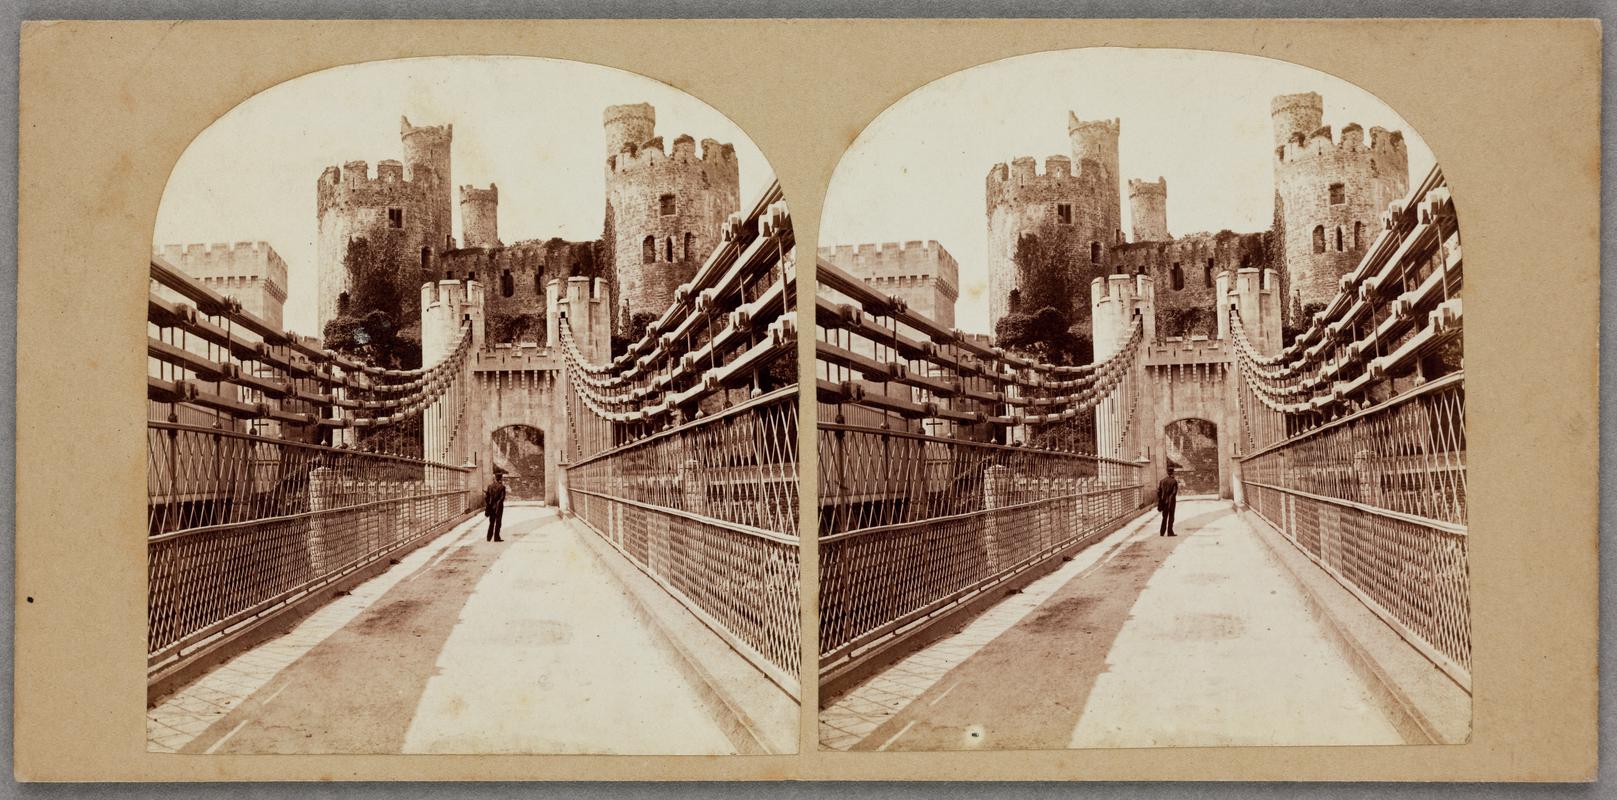 Conway Castle and bridge, photograph